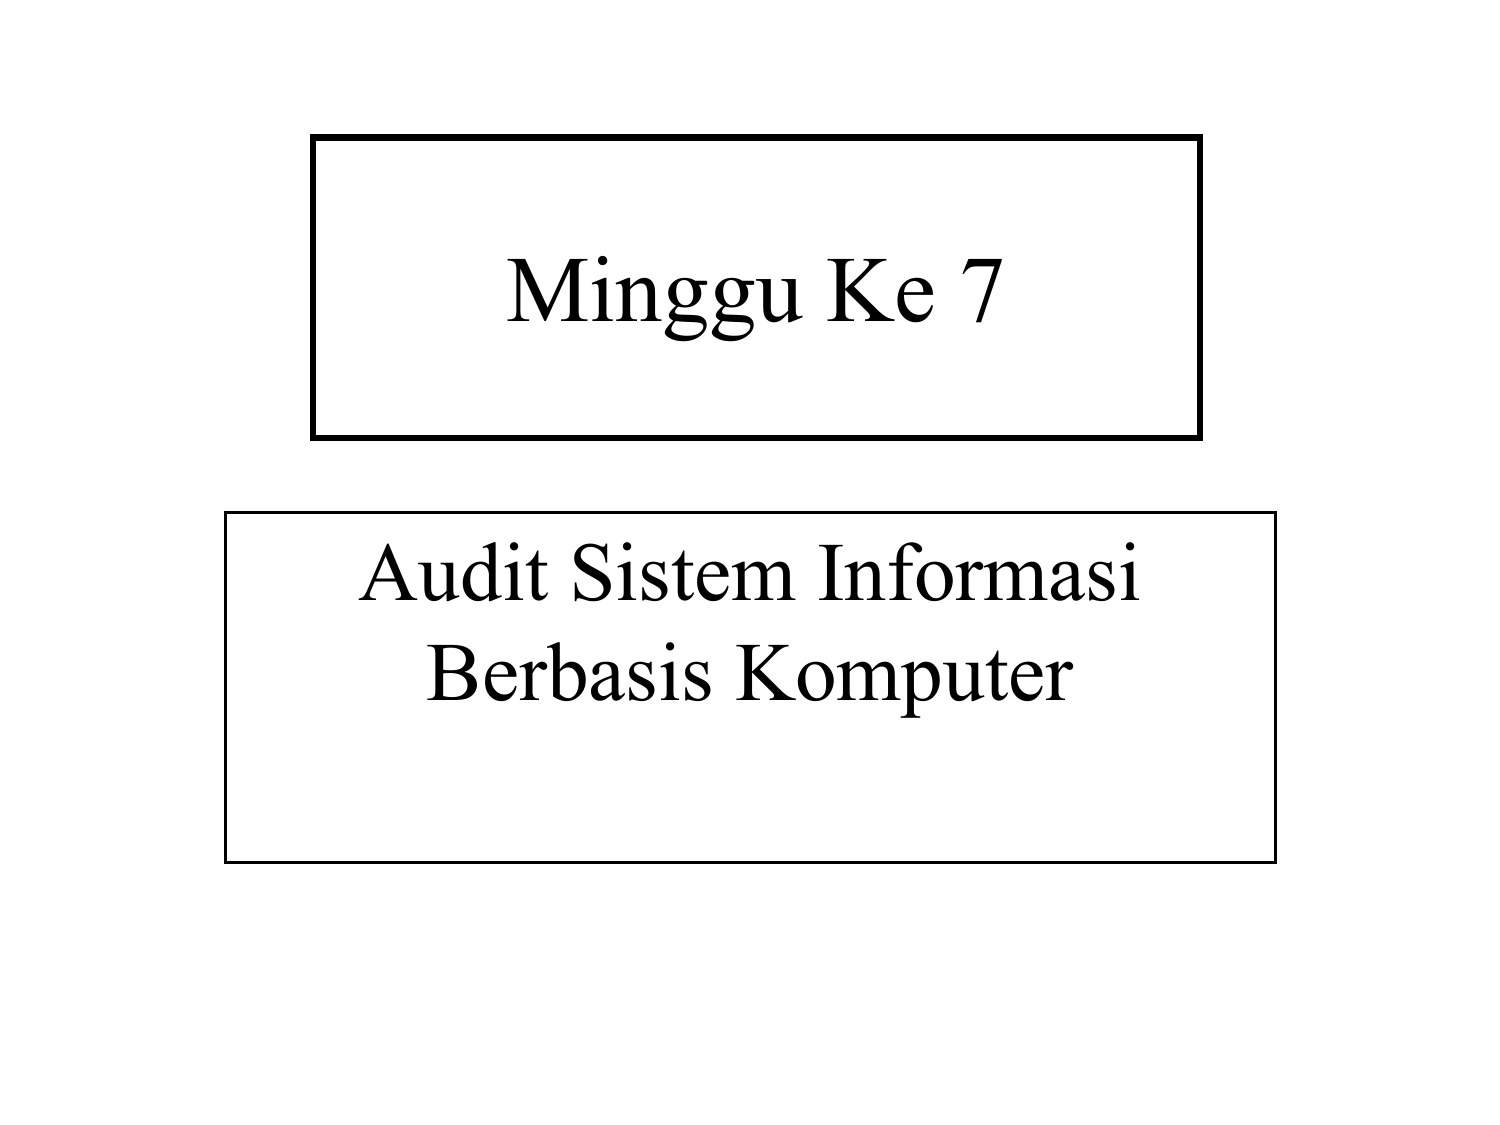 Chapter 7 Audit Sistem Informasi Berbasis Komputer